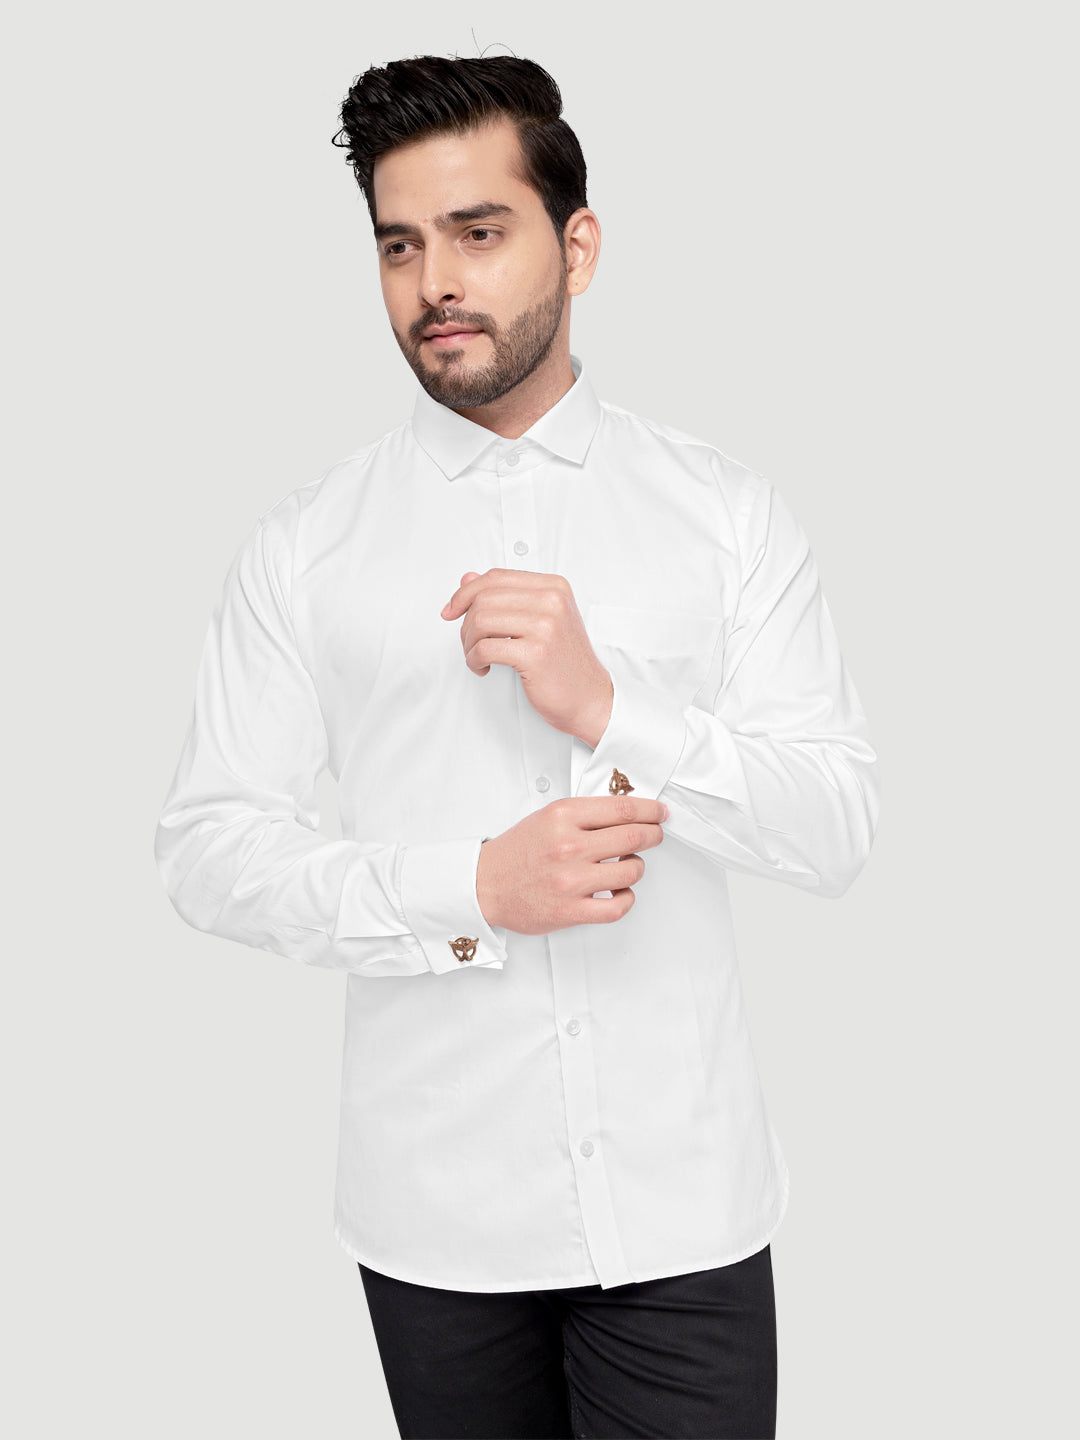 Black and White Shirts Men's Formal Cufflink Shirt White w/o bow